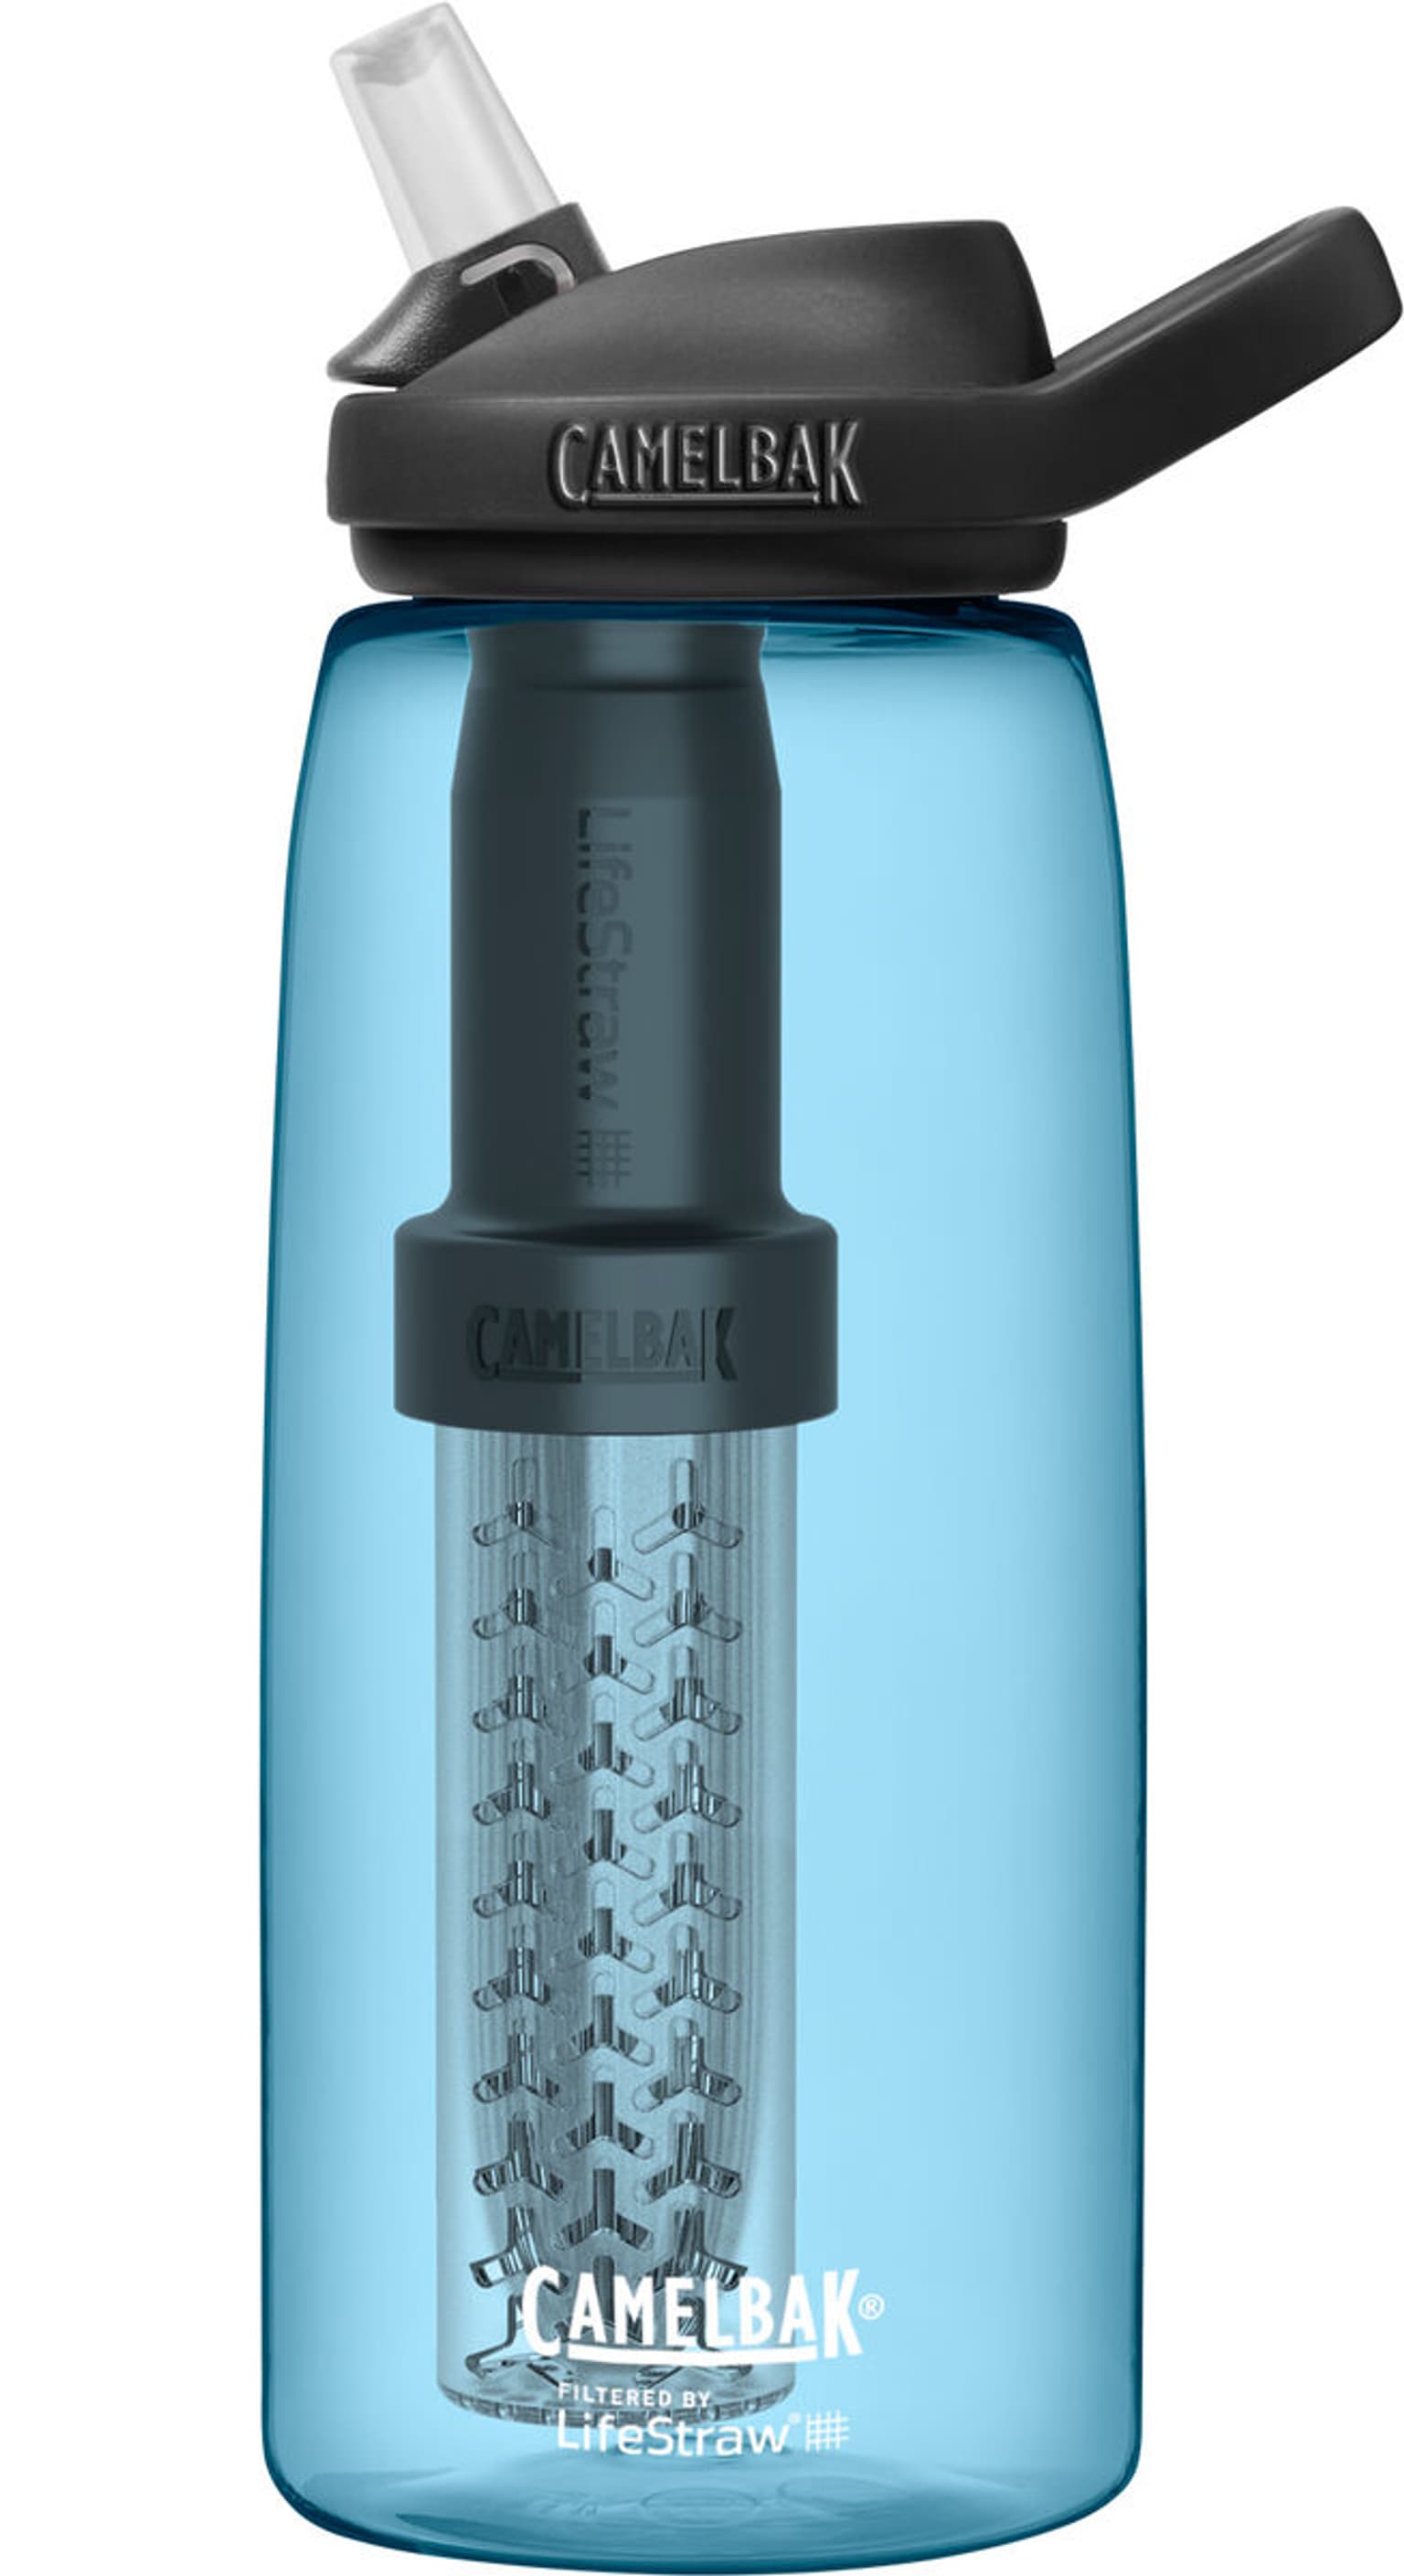 Camelbak Camelbak Eddy+ Bottle Lifestraw 1.0l Filtre à eau bleu 1